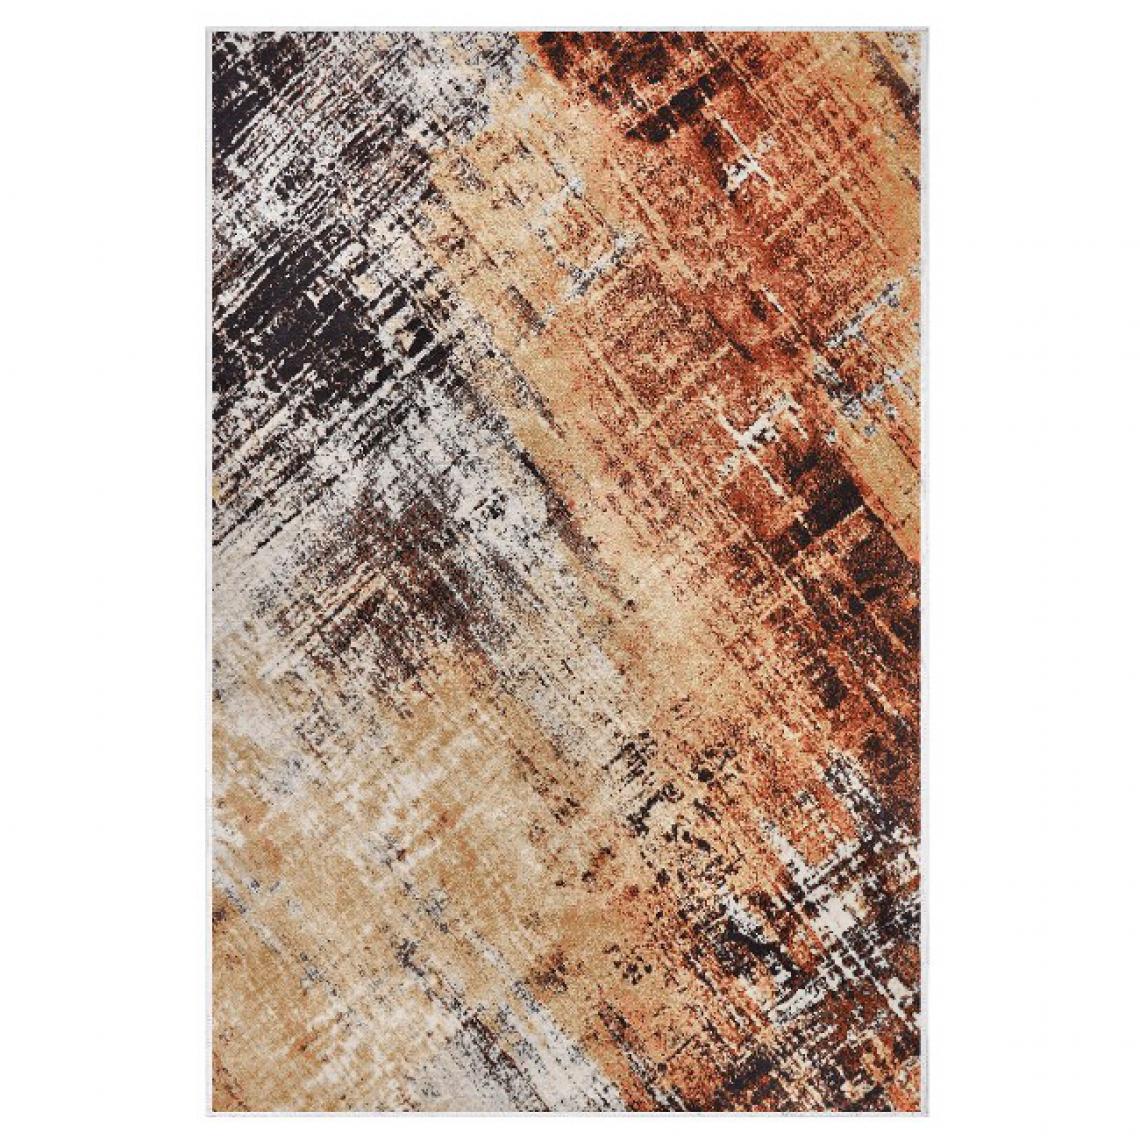 Homemania - Tapis d'ameublement Brush 1 - Multicouleur - 160 x 230 cm - Tapis